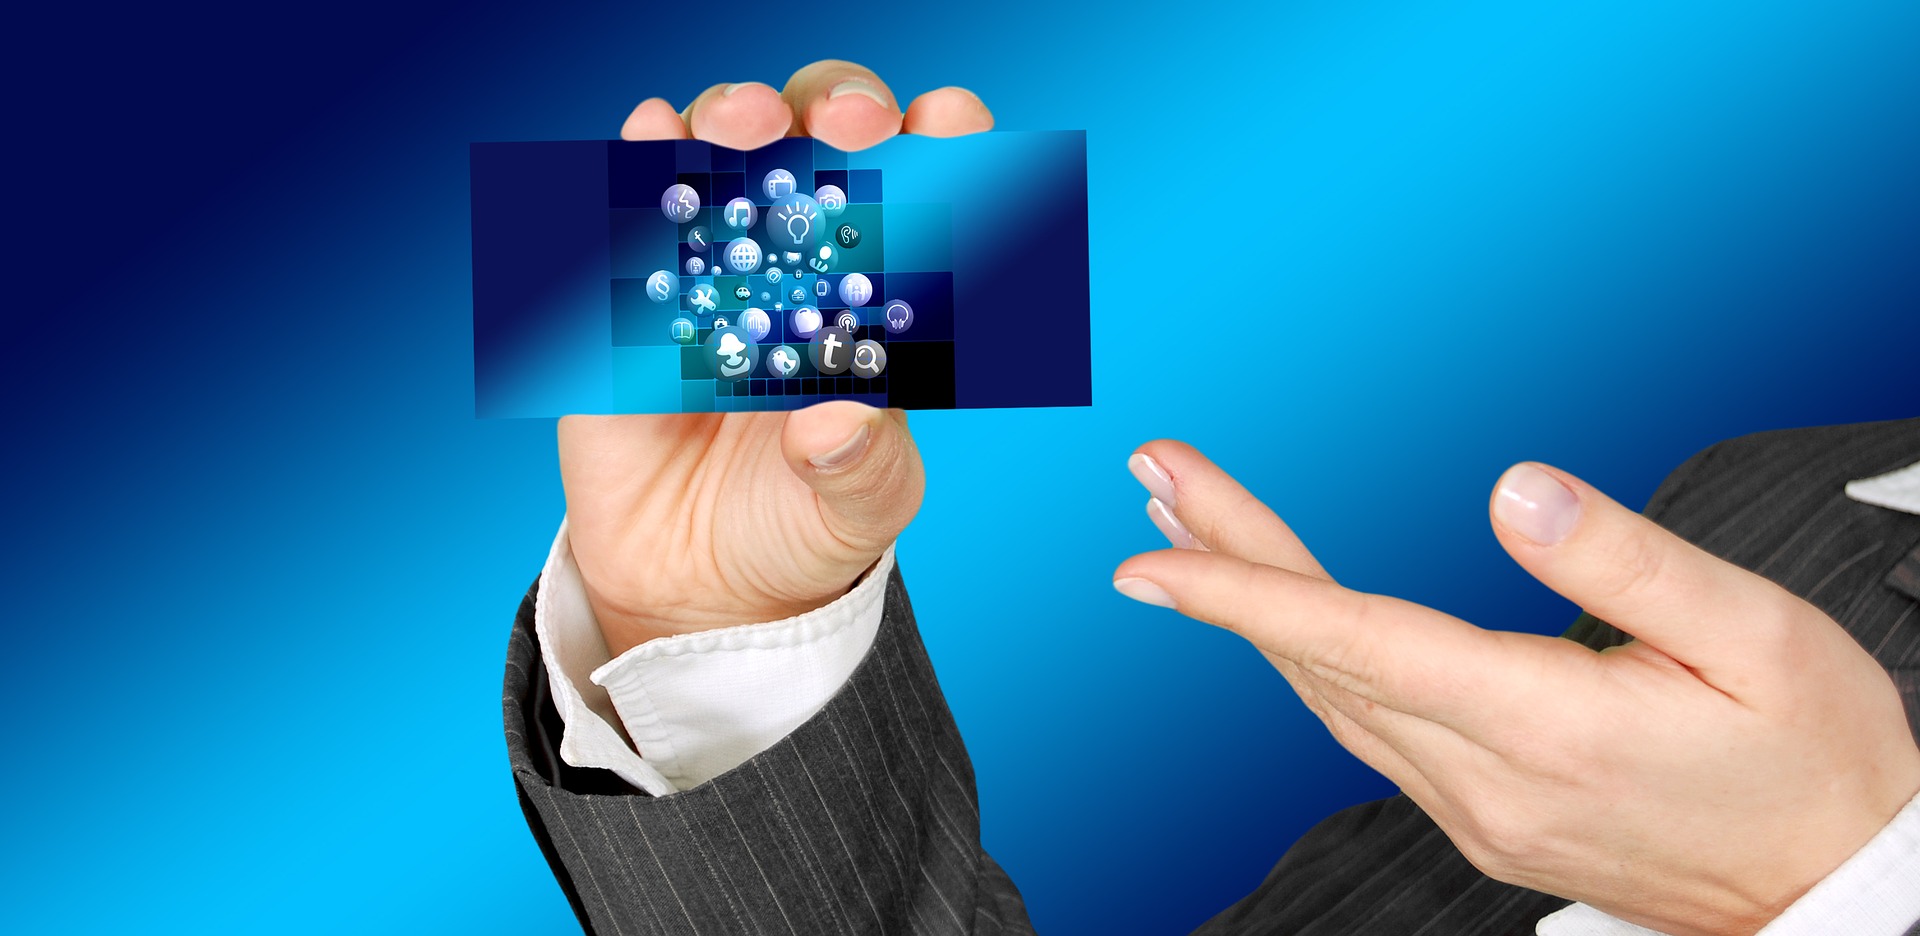 Hands presenting an internet business card